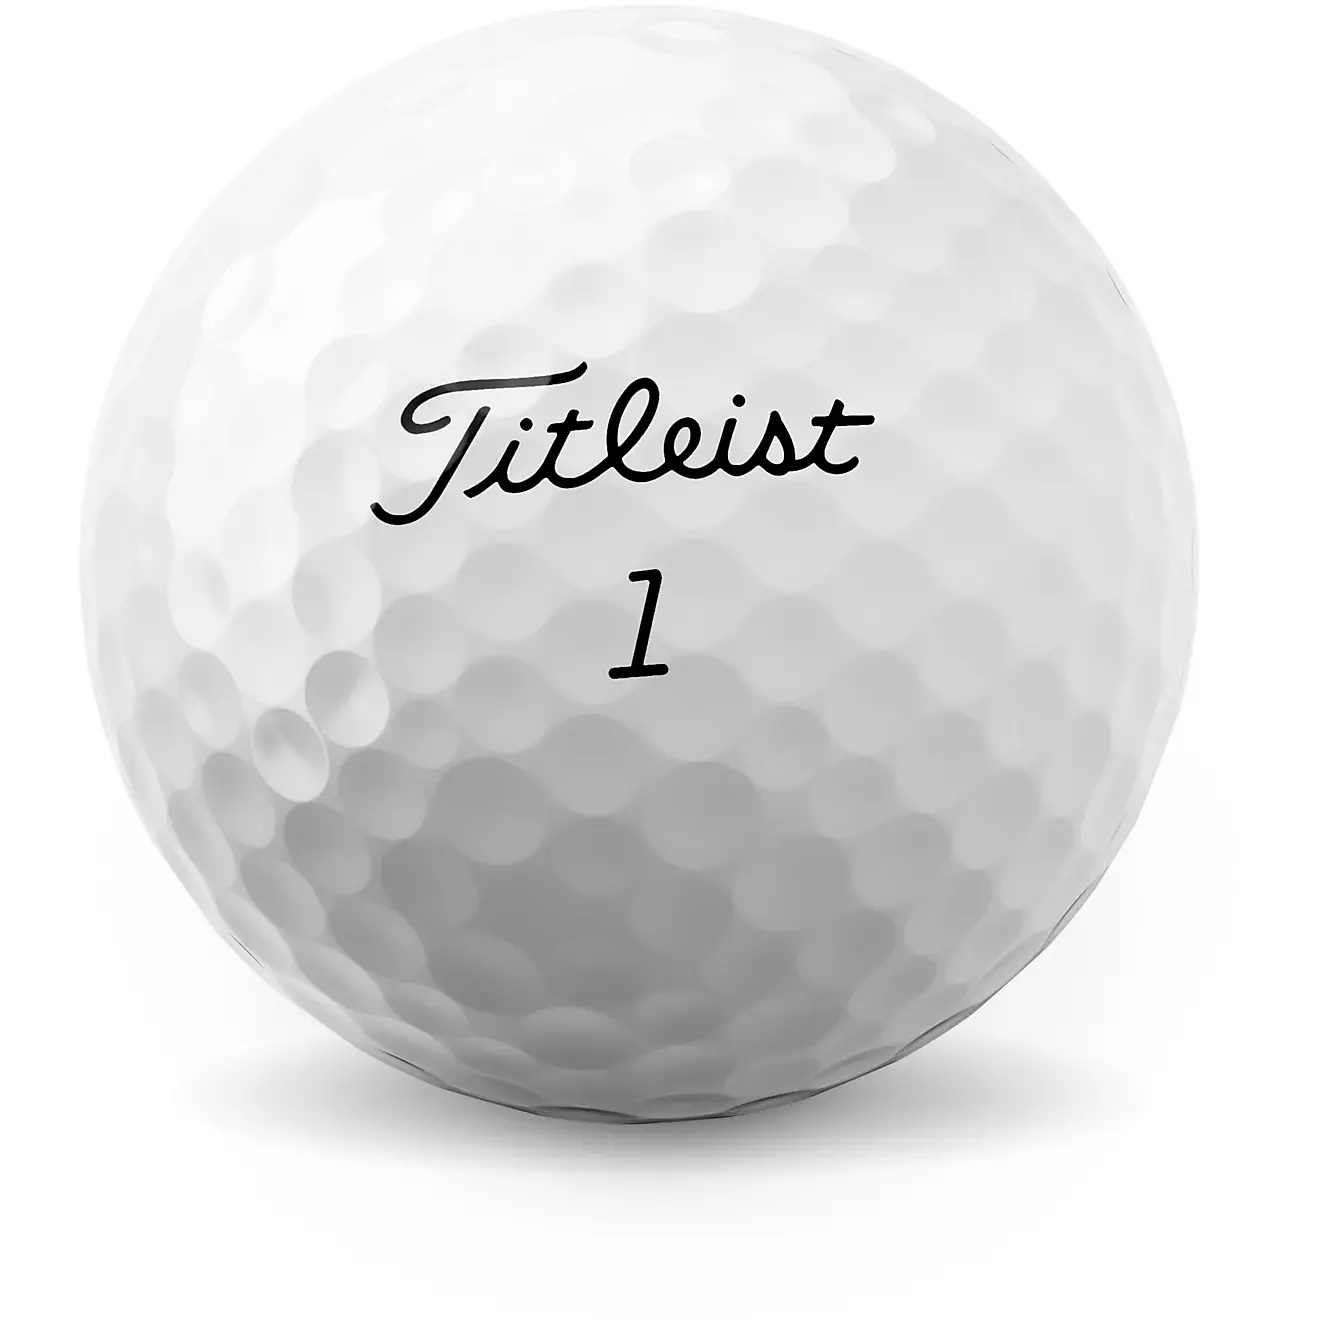 2021 Golf Ball Test Results